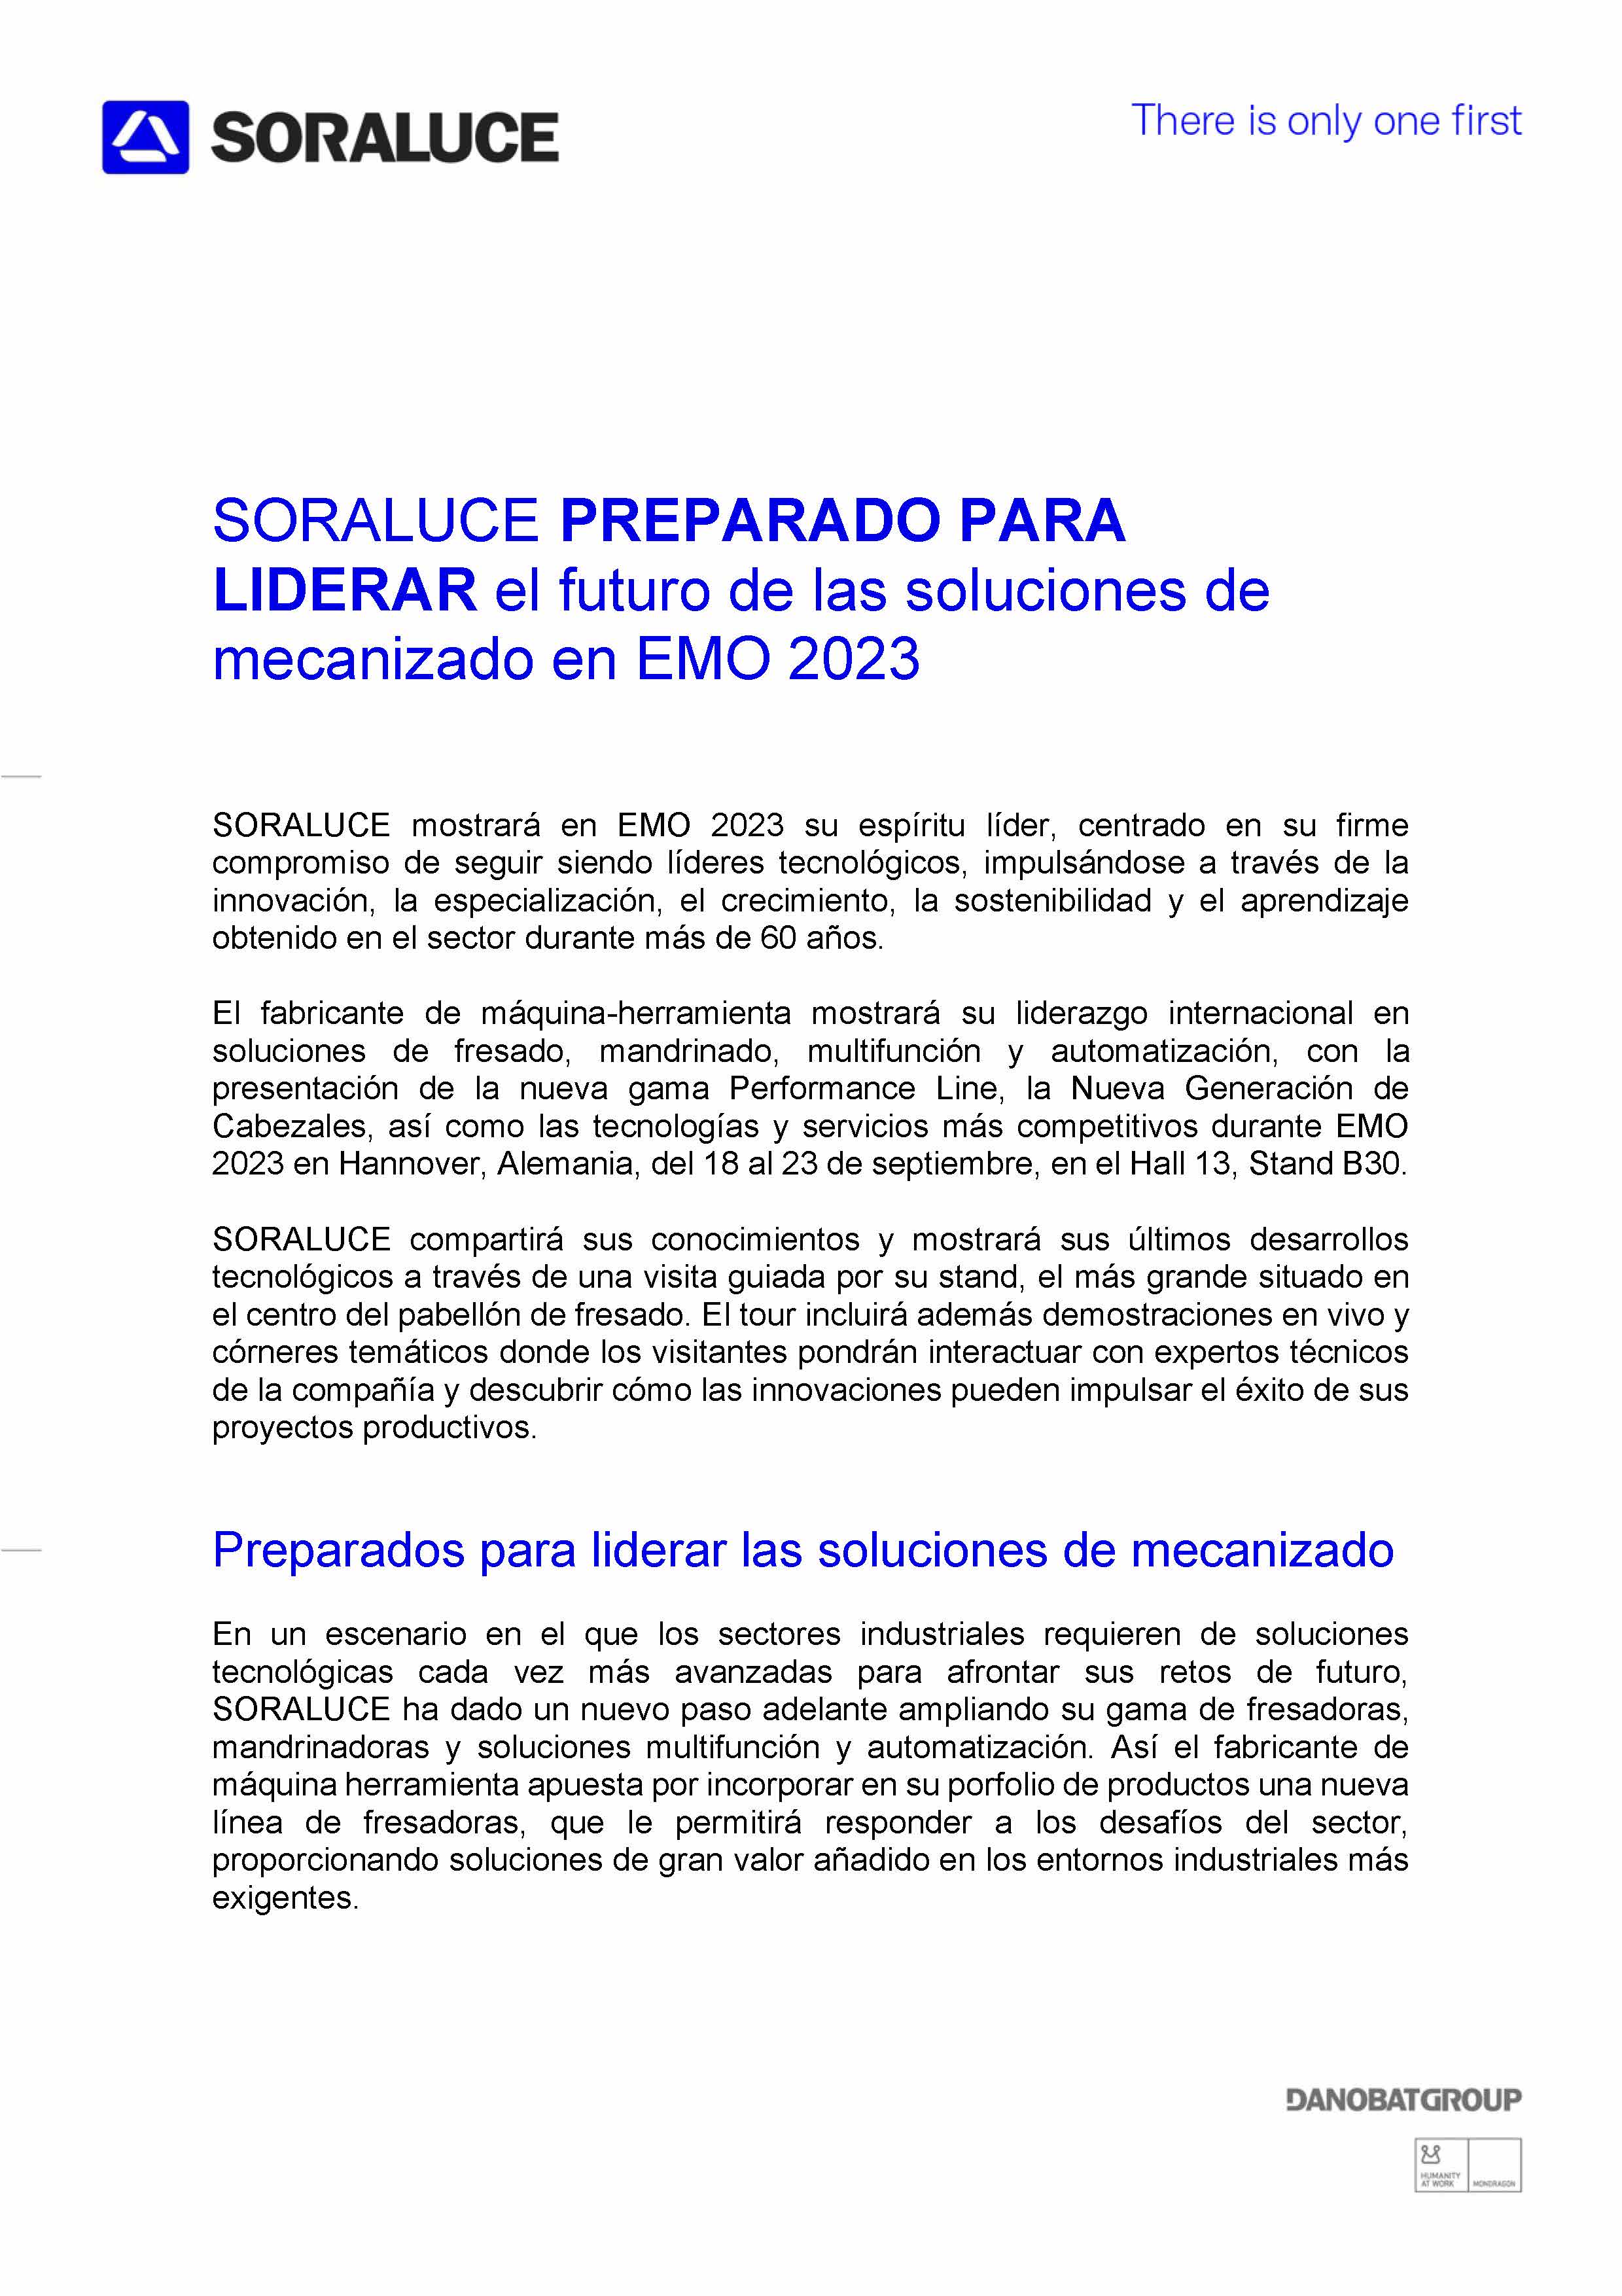 SORALUCE AT EMO 2023 PRESS RELEASE (SPANISH)